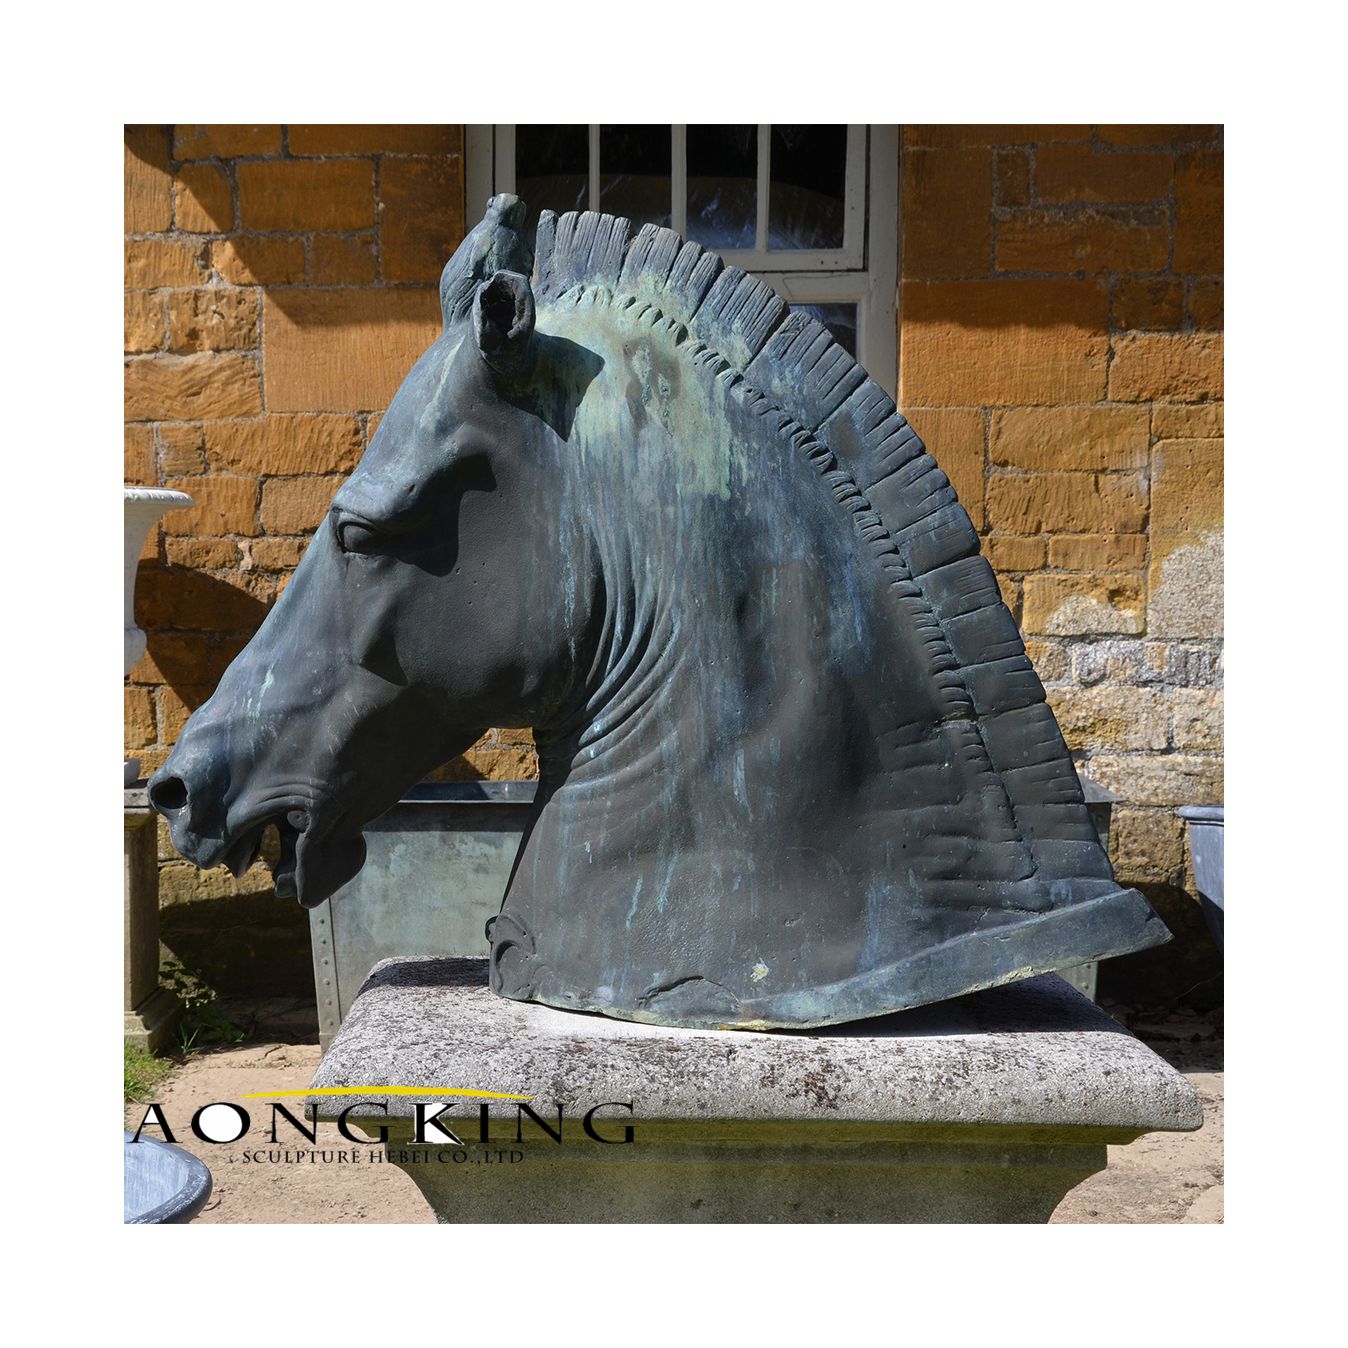 Horse head bronze statue